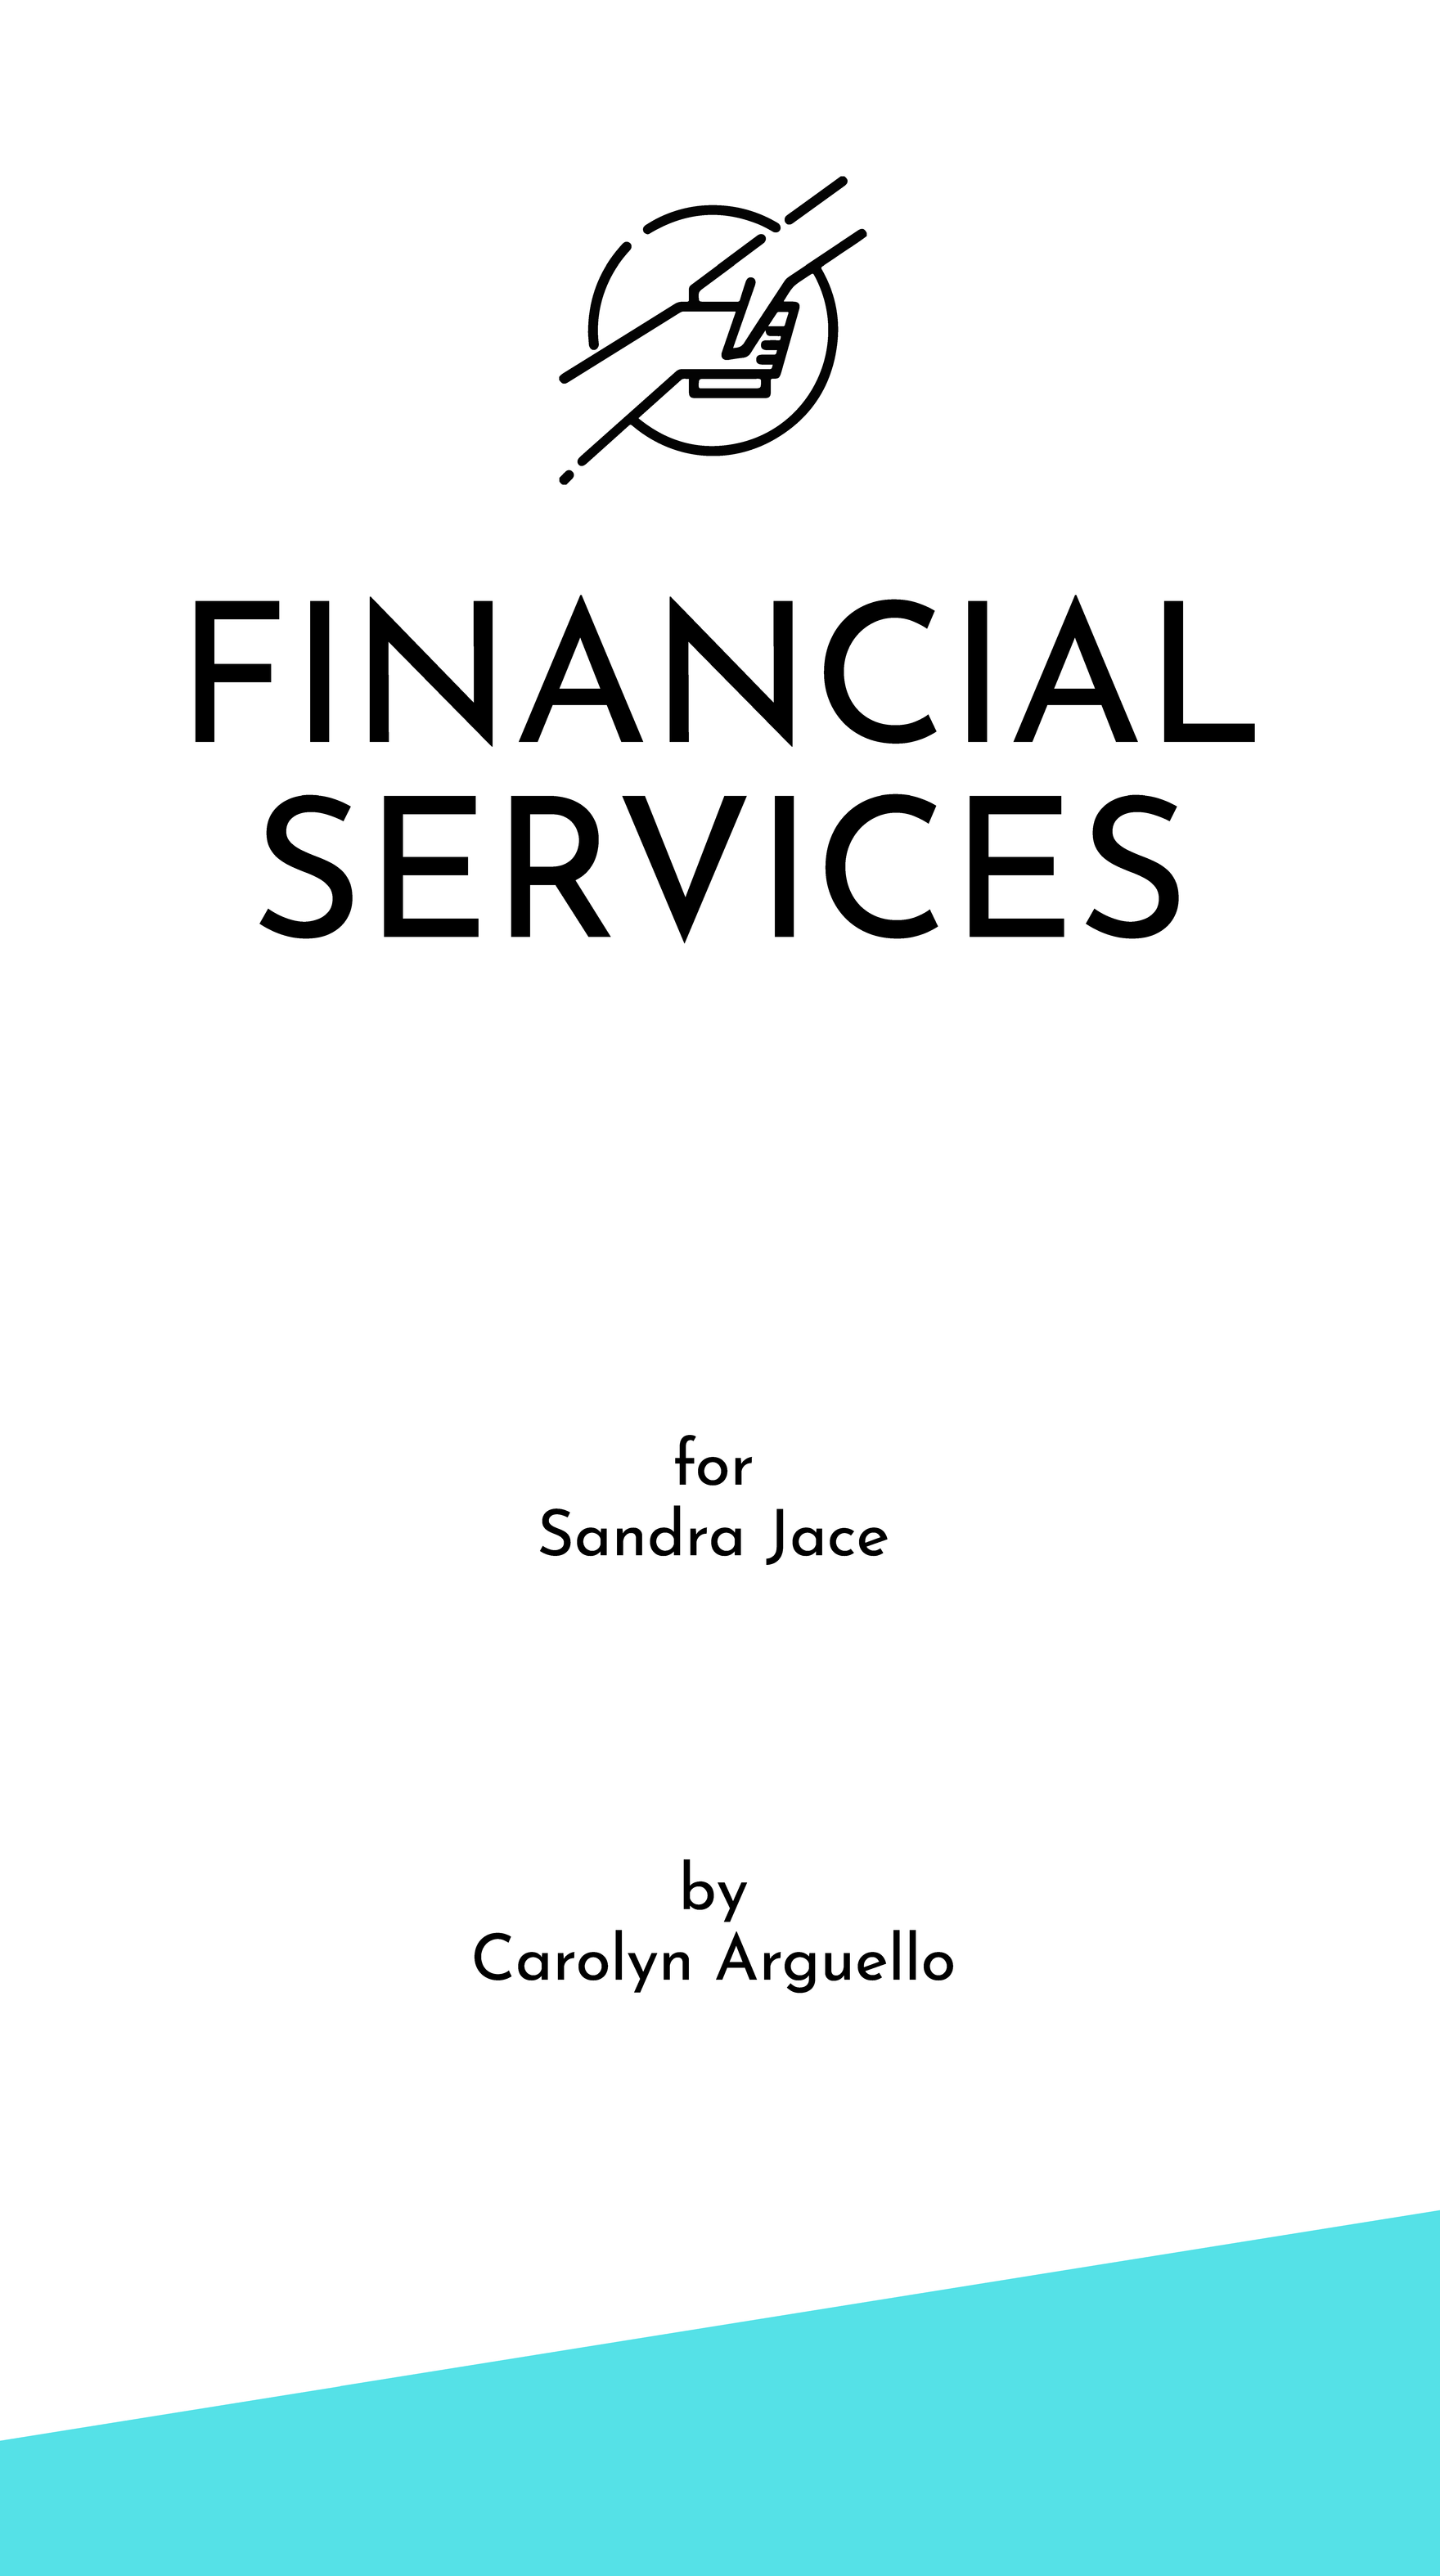 Financial Services Mobile Presentation